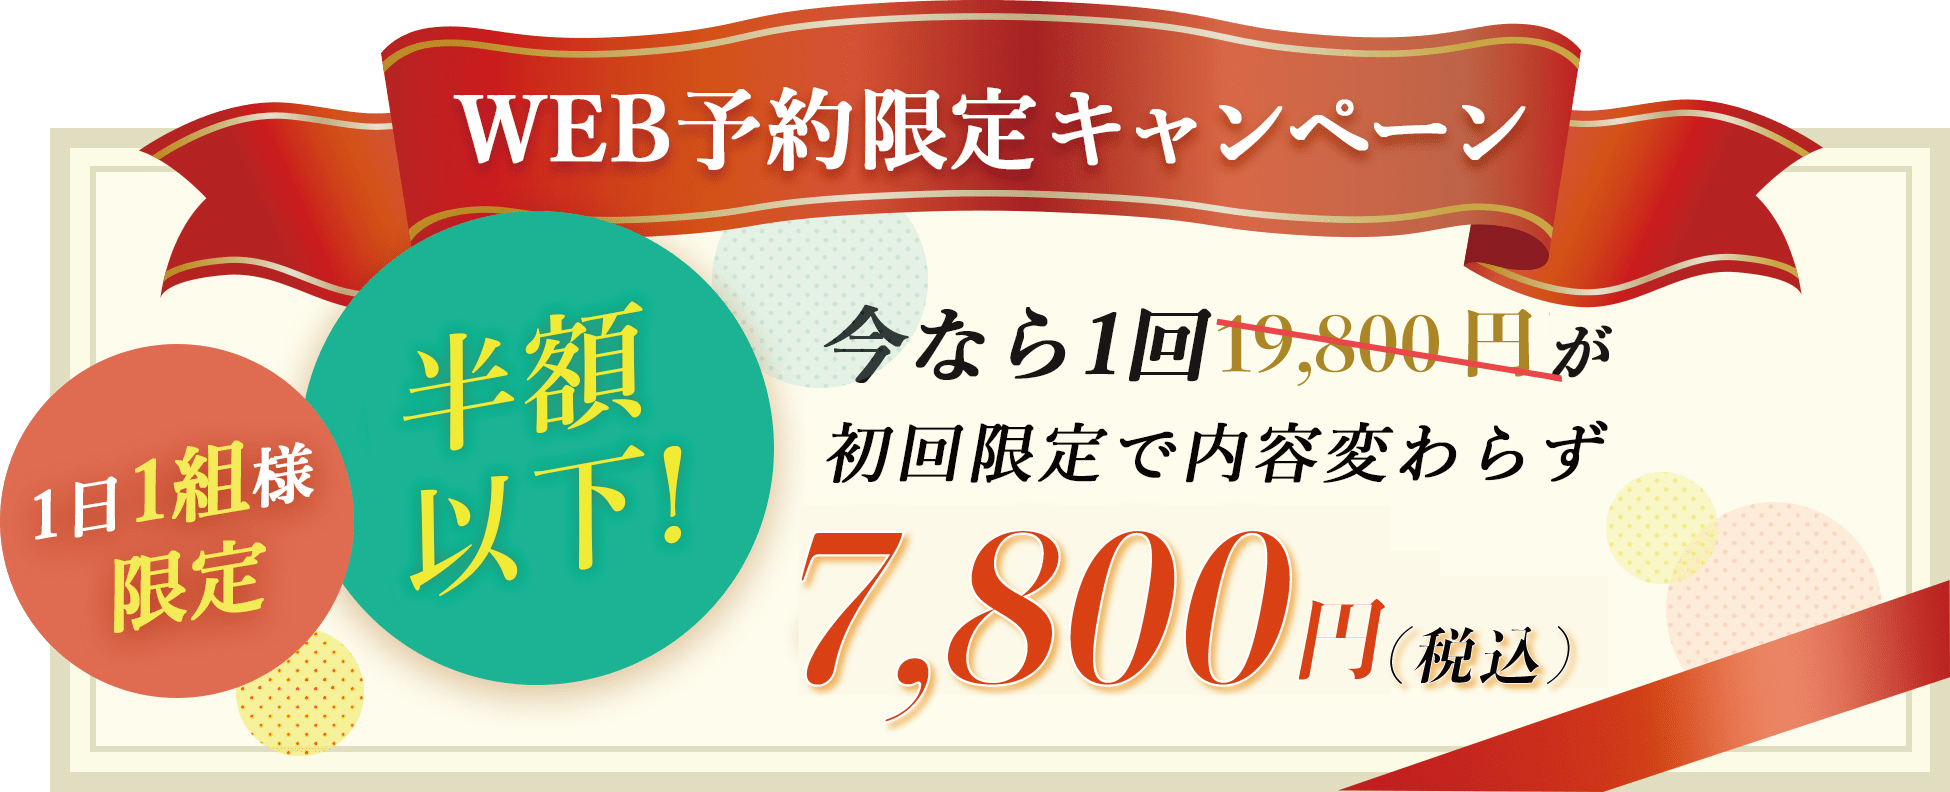 【WEB予約限定キャンペーン】今なら1回15,000円が、初回限定で内容変わらず5,000円 (税別)